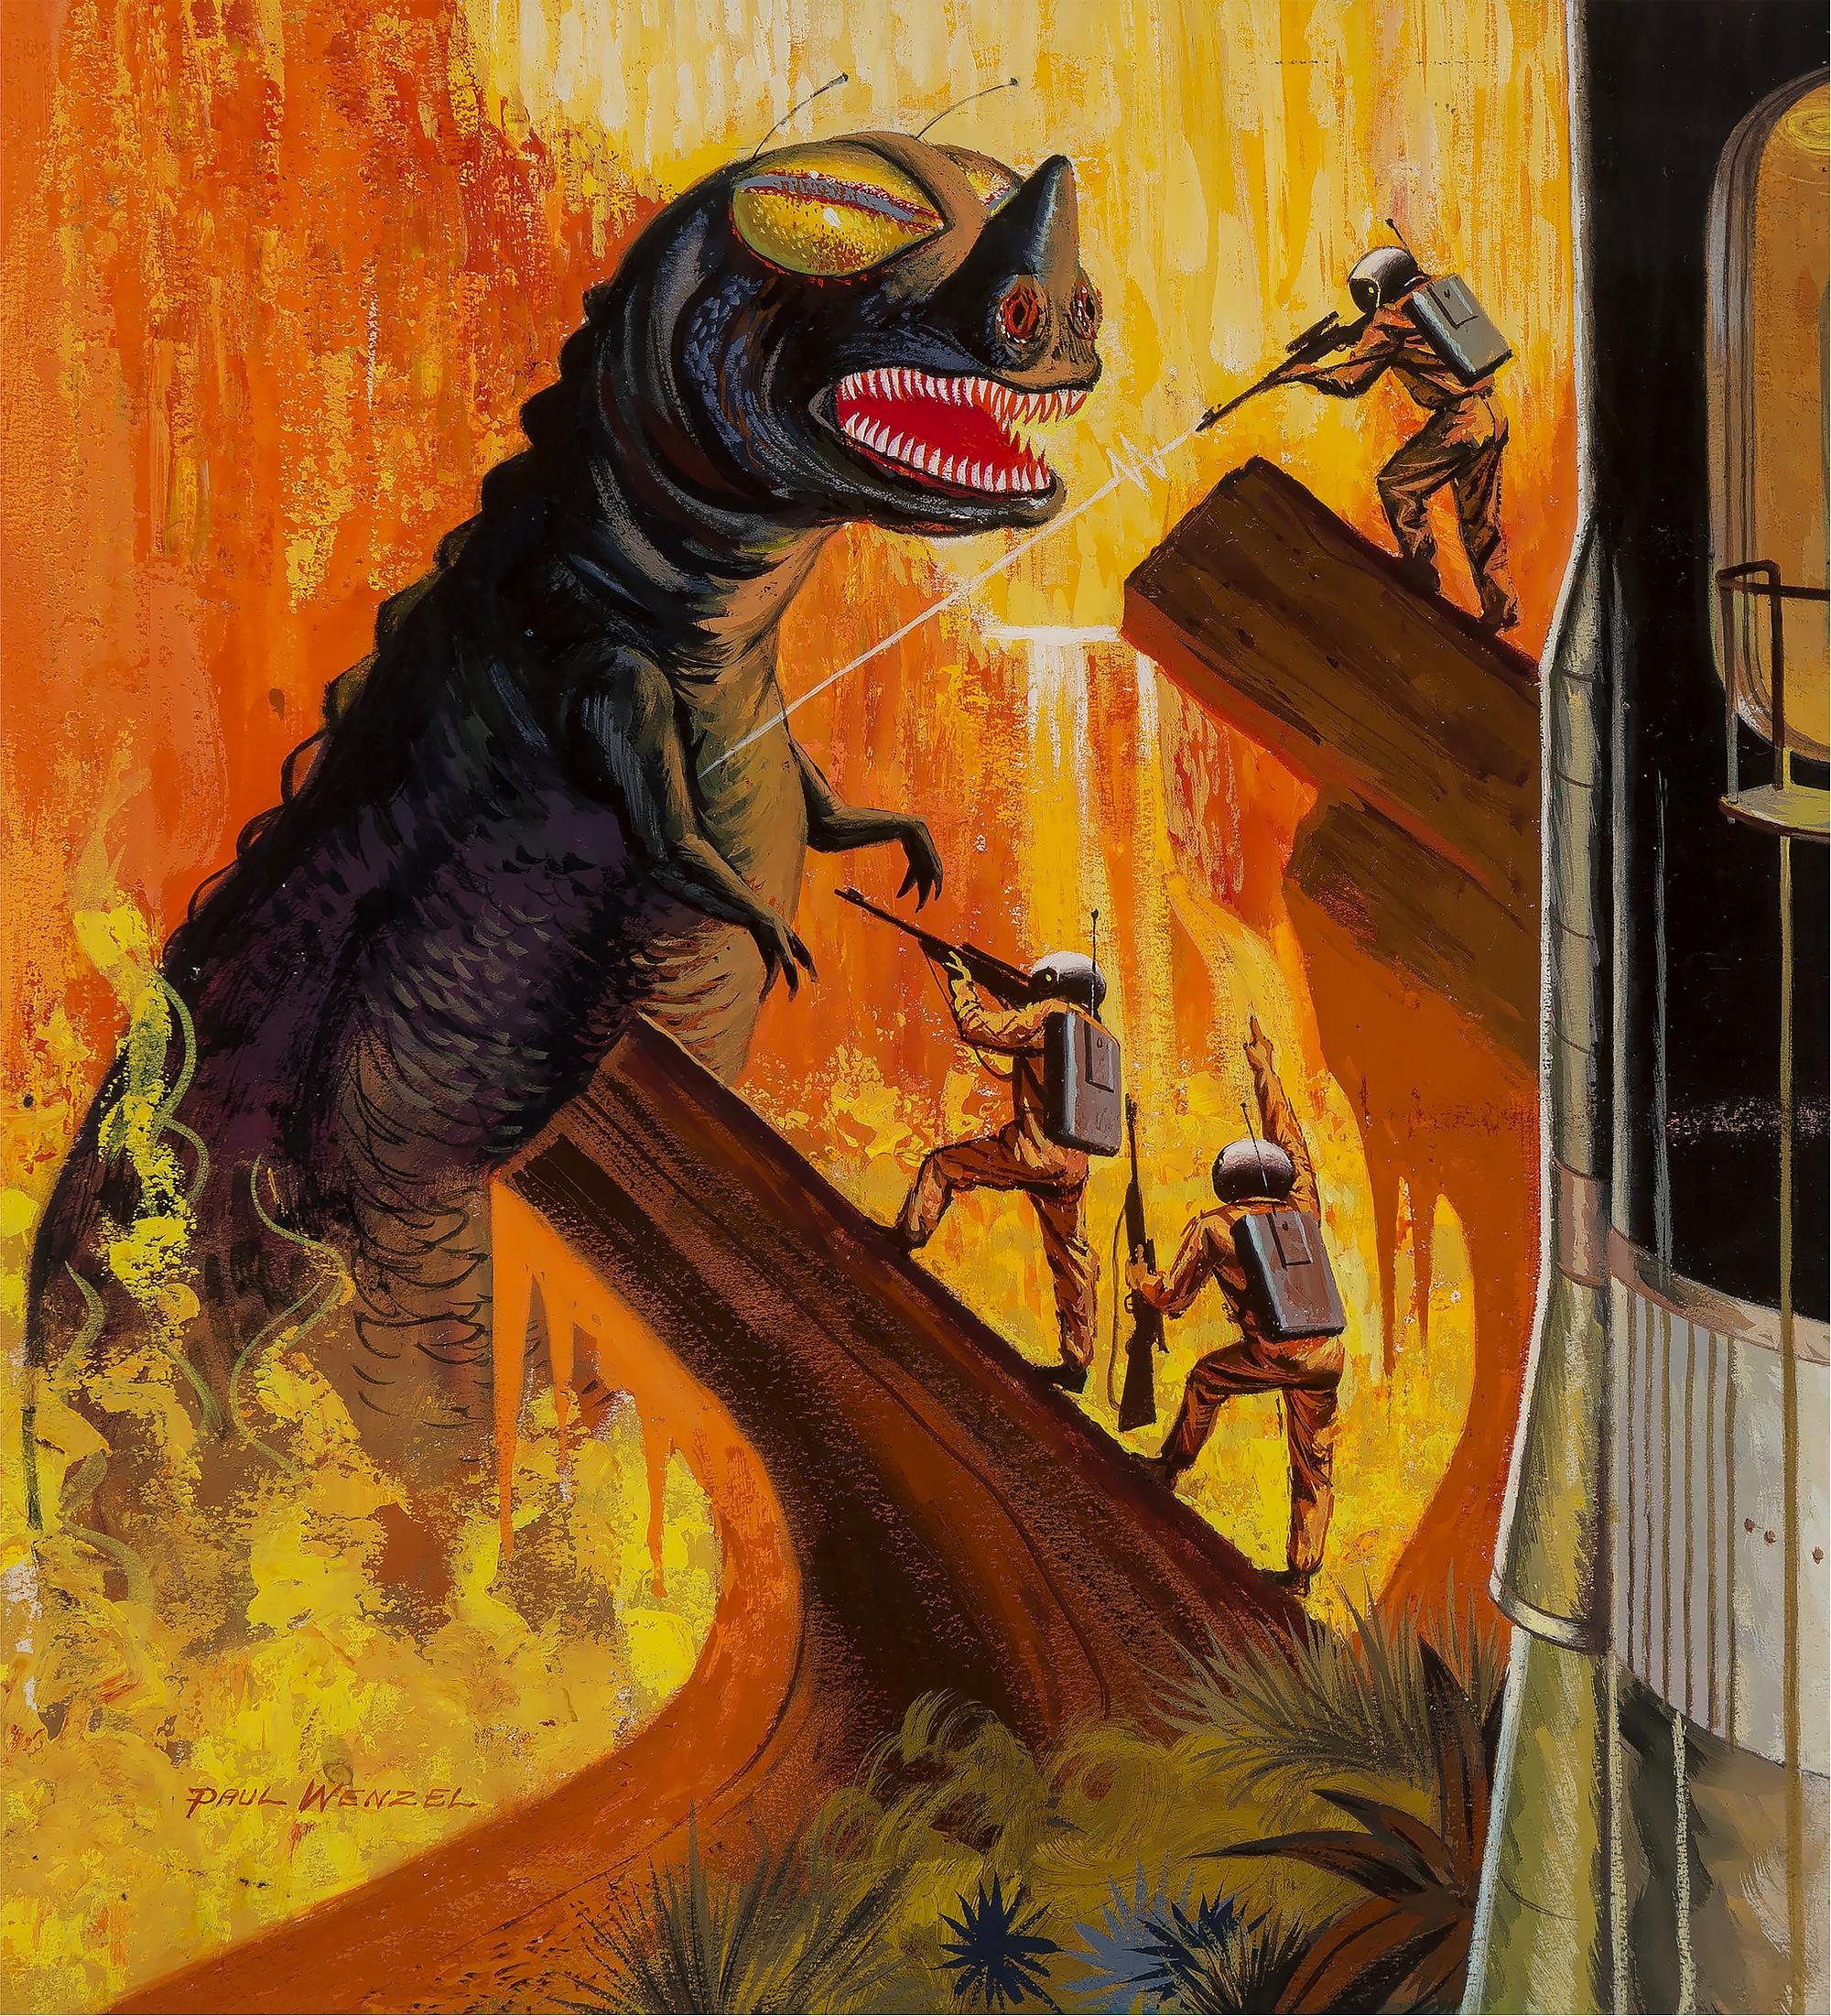 Paul Wenzel Figurative Painting - Godzilla like Dinosaur Monster, SciFi, Science Fiction Cover Illustration